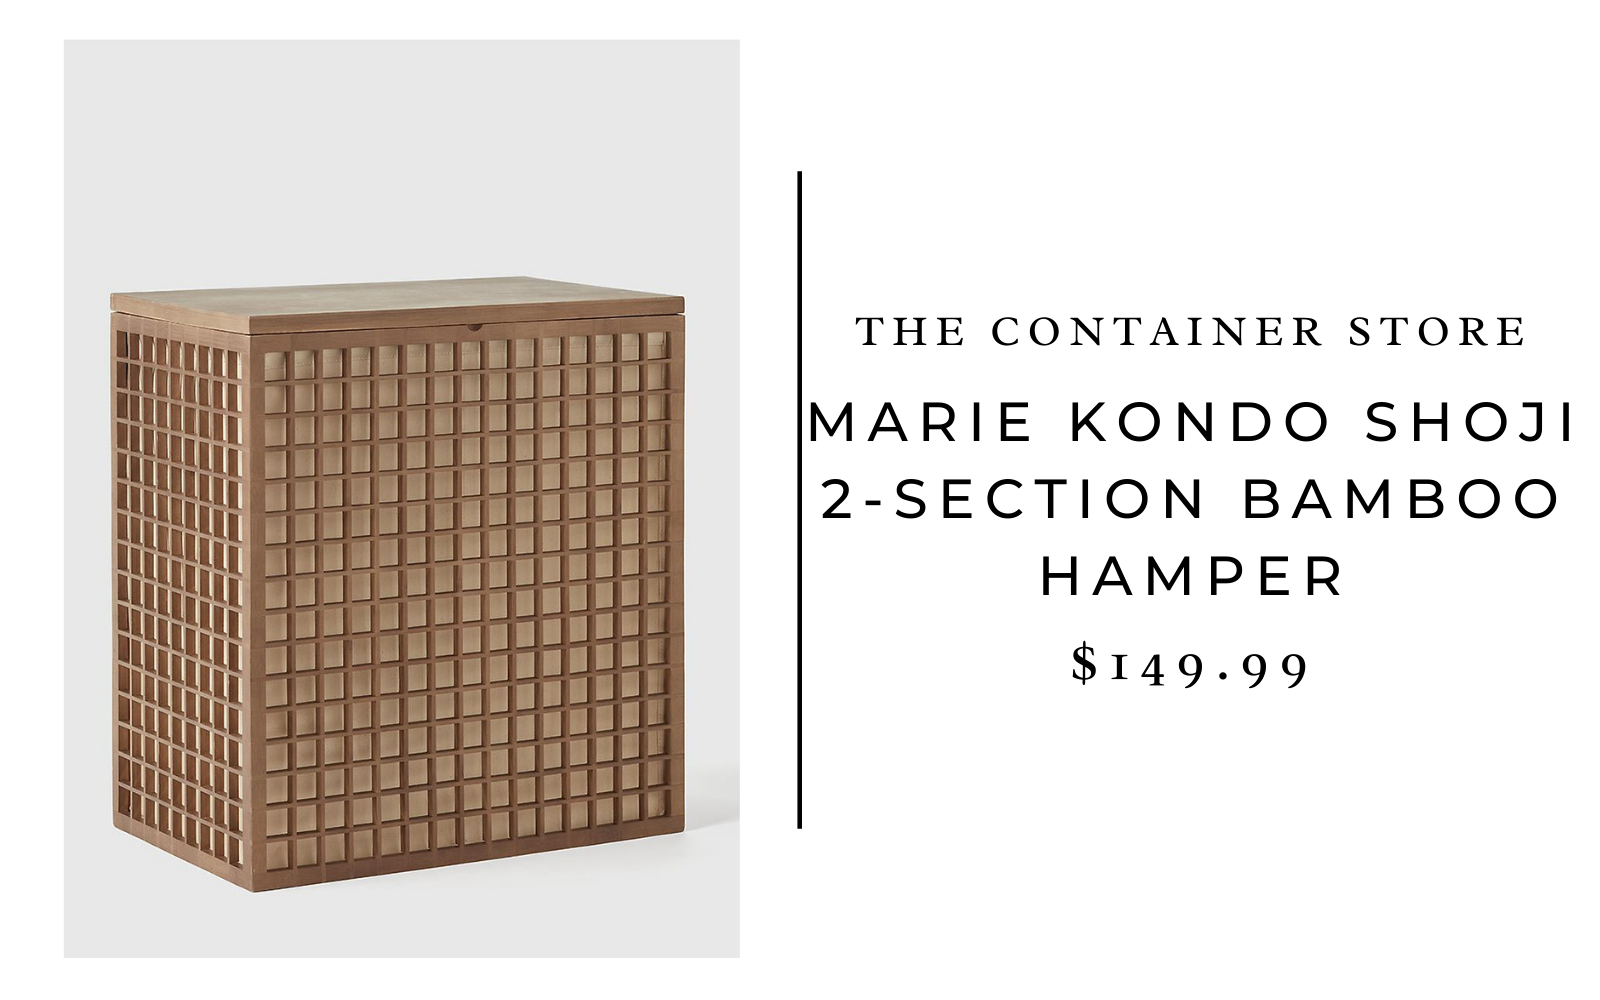 The Container Store Marie Kondo Shoji 2-Section Bamboo Hamper